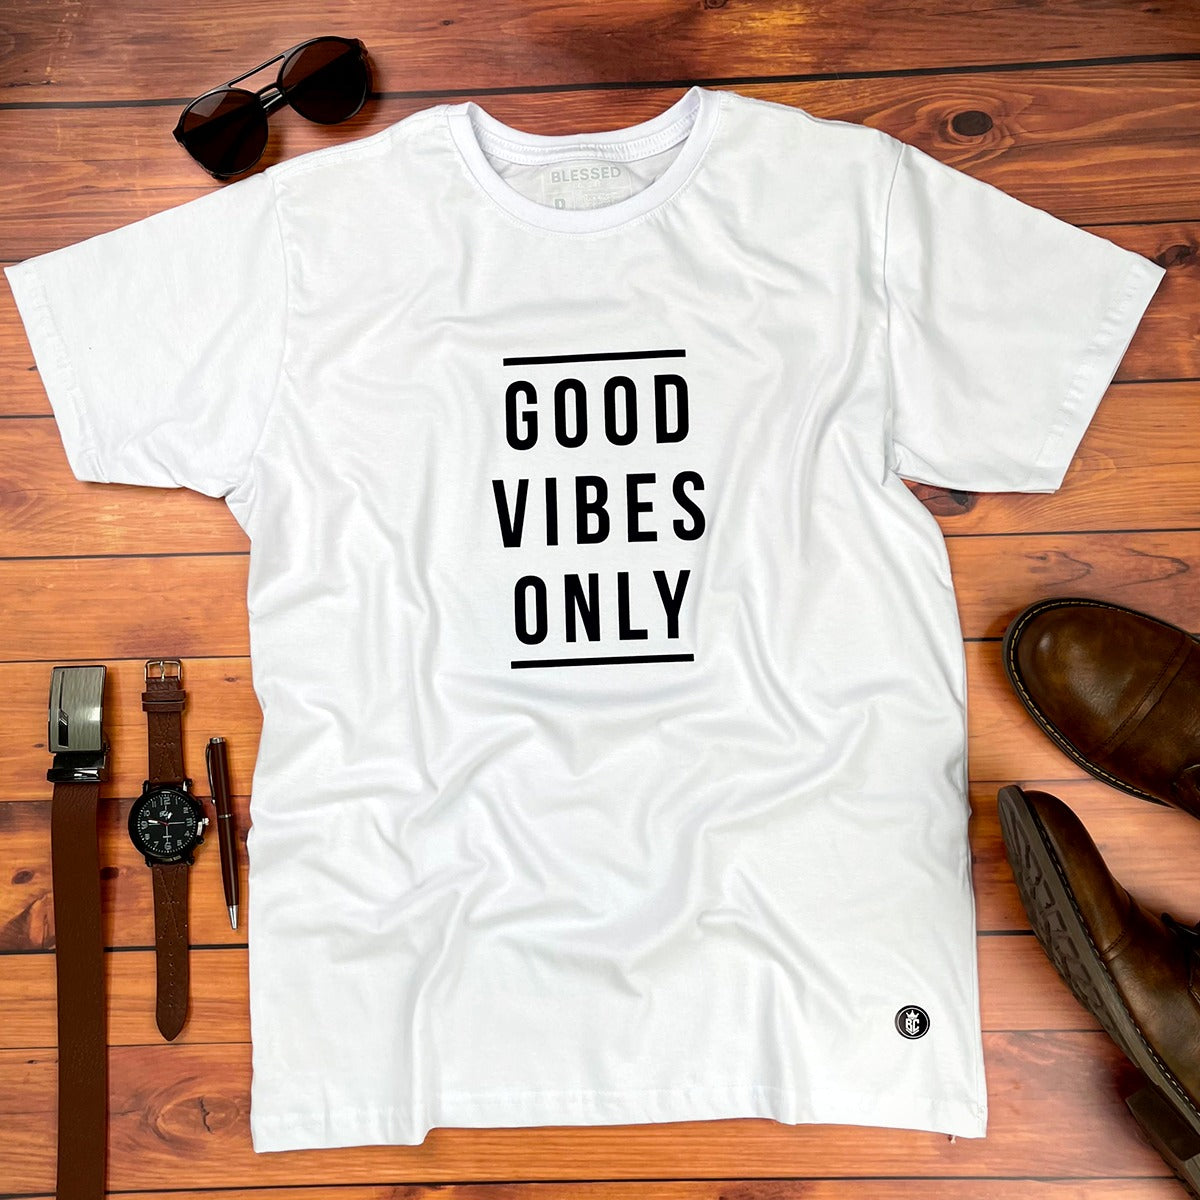 Camiseta Masculina Branca Good vibes only